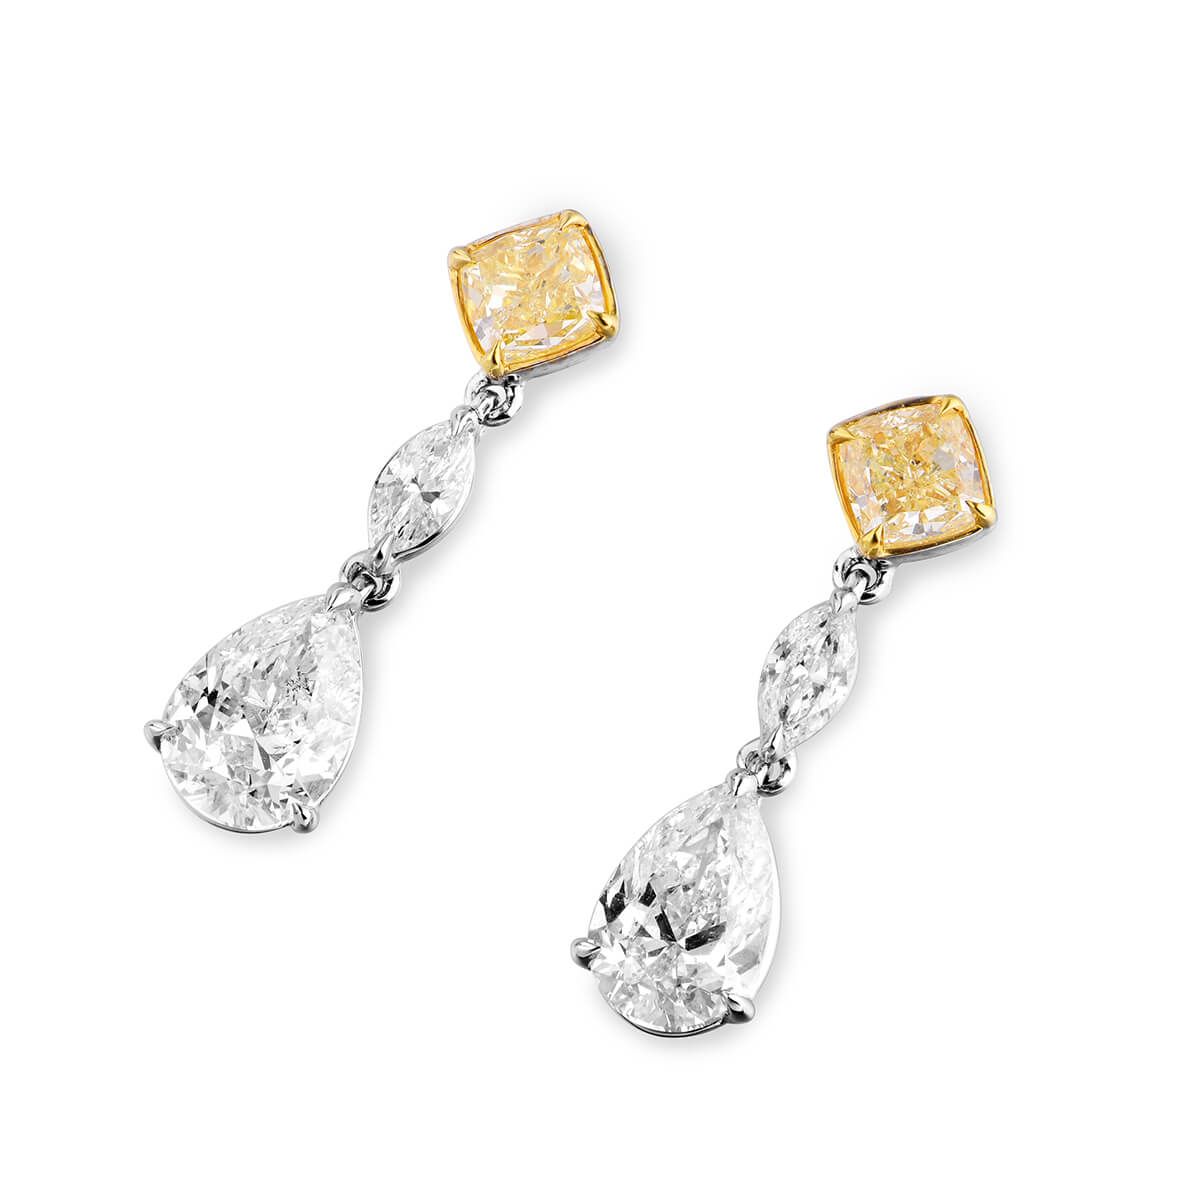  White Diamond Earrings, 3.16 Ct. TW, Marquise shape, GIA Certified, JCEF05398293